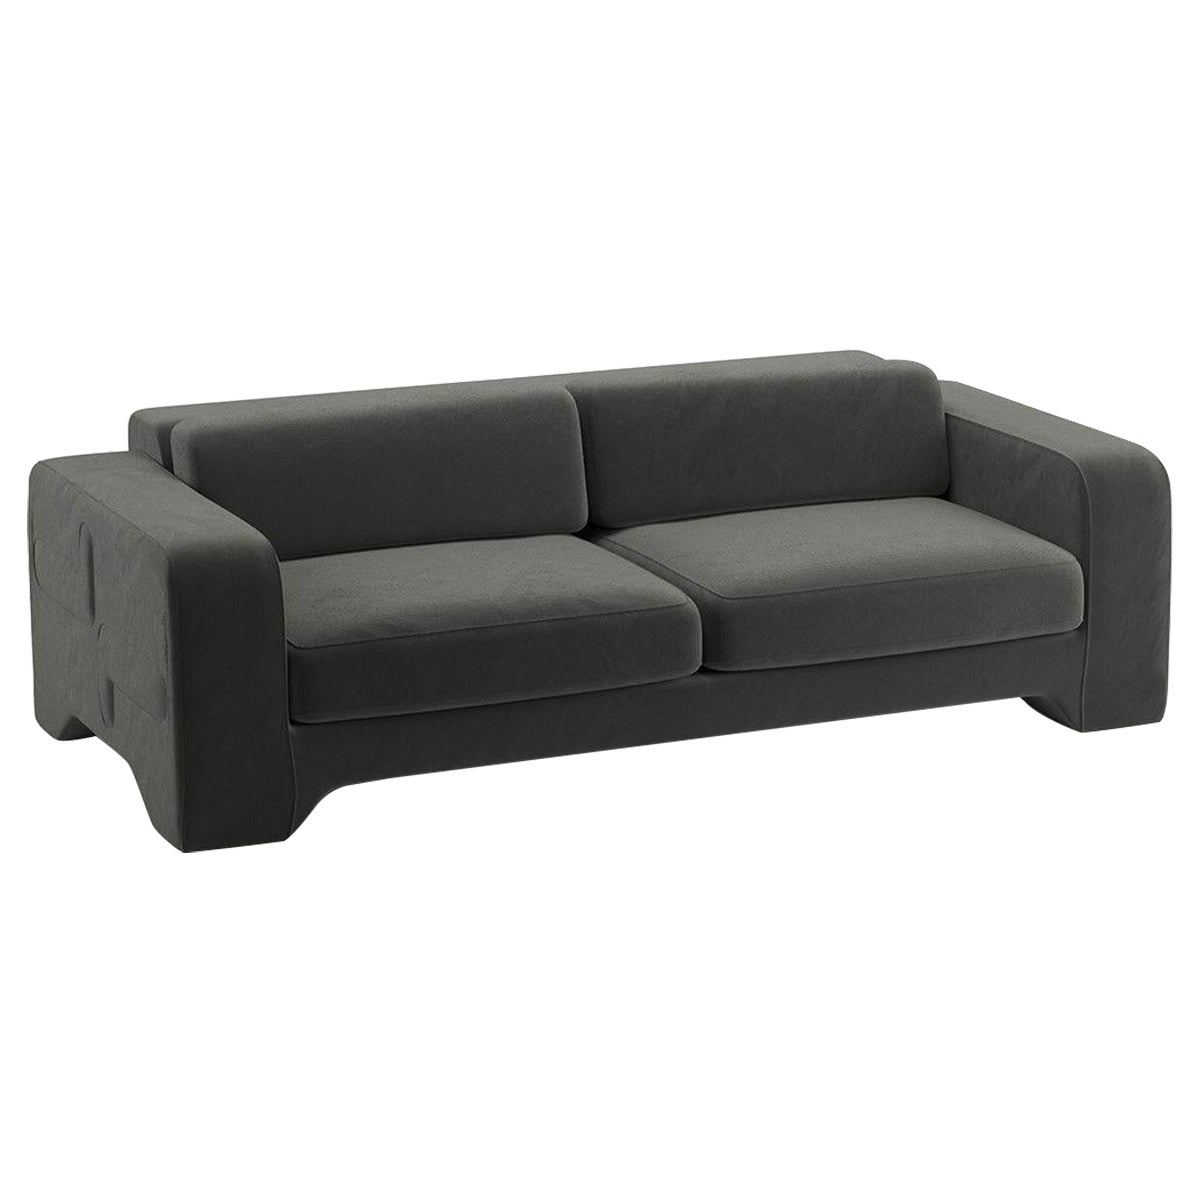 Popus Editions Giovanna 3 Seater Sofa in Khaki Como Velvet Upholstery For Sale